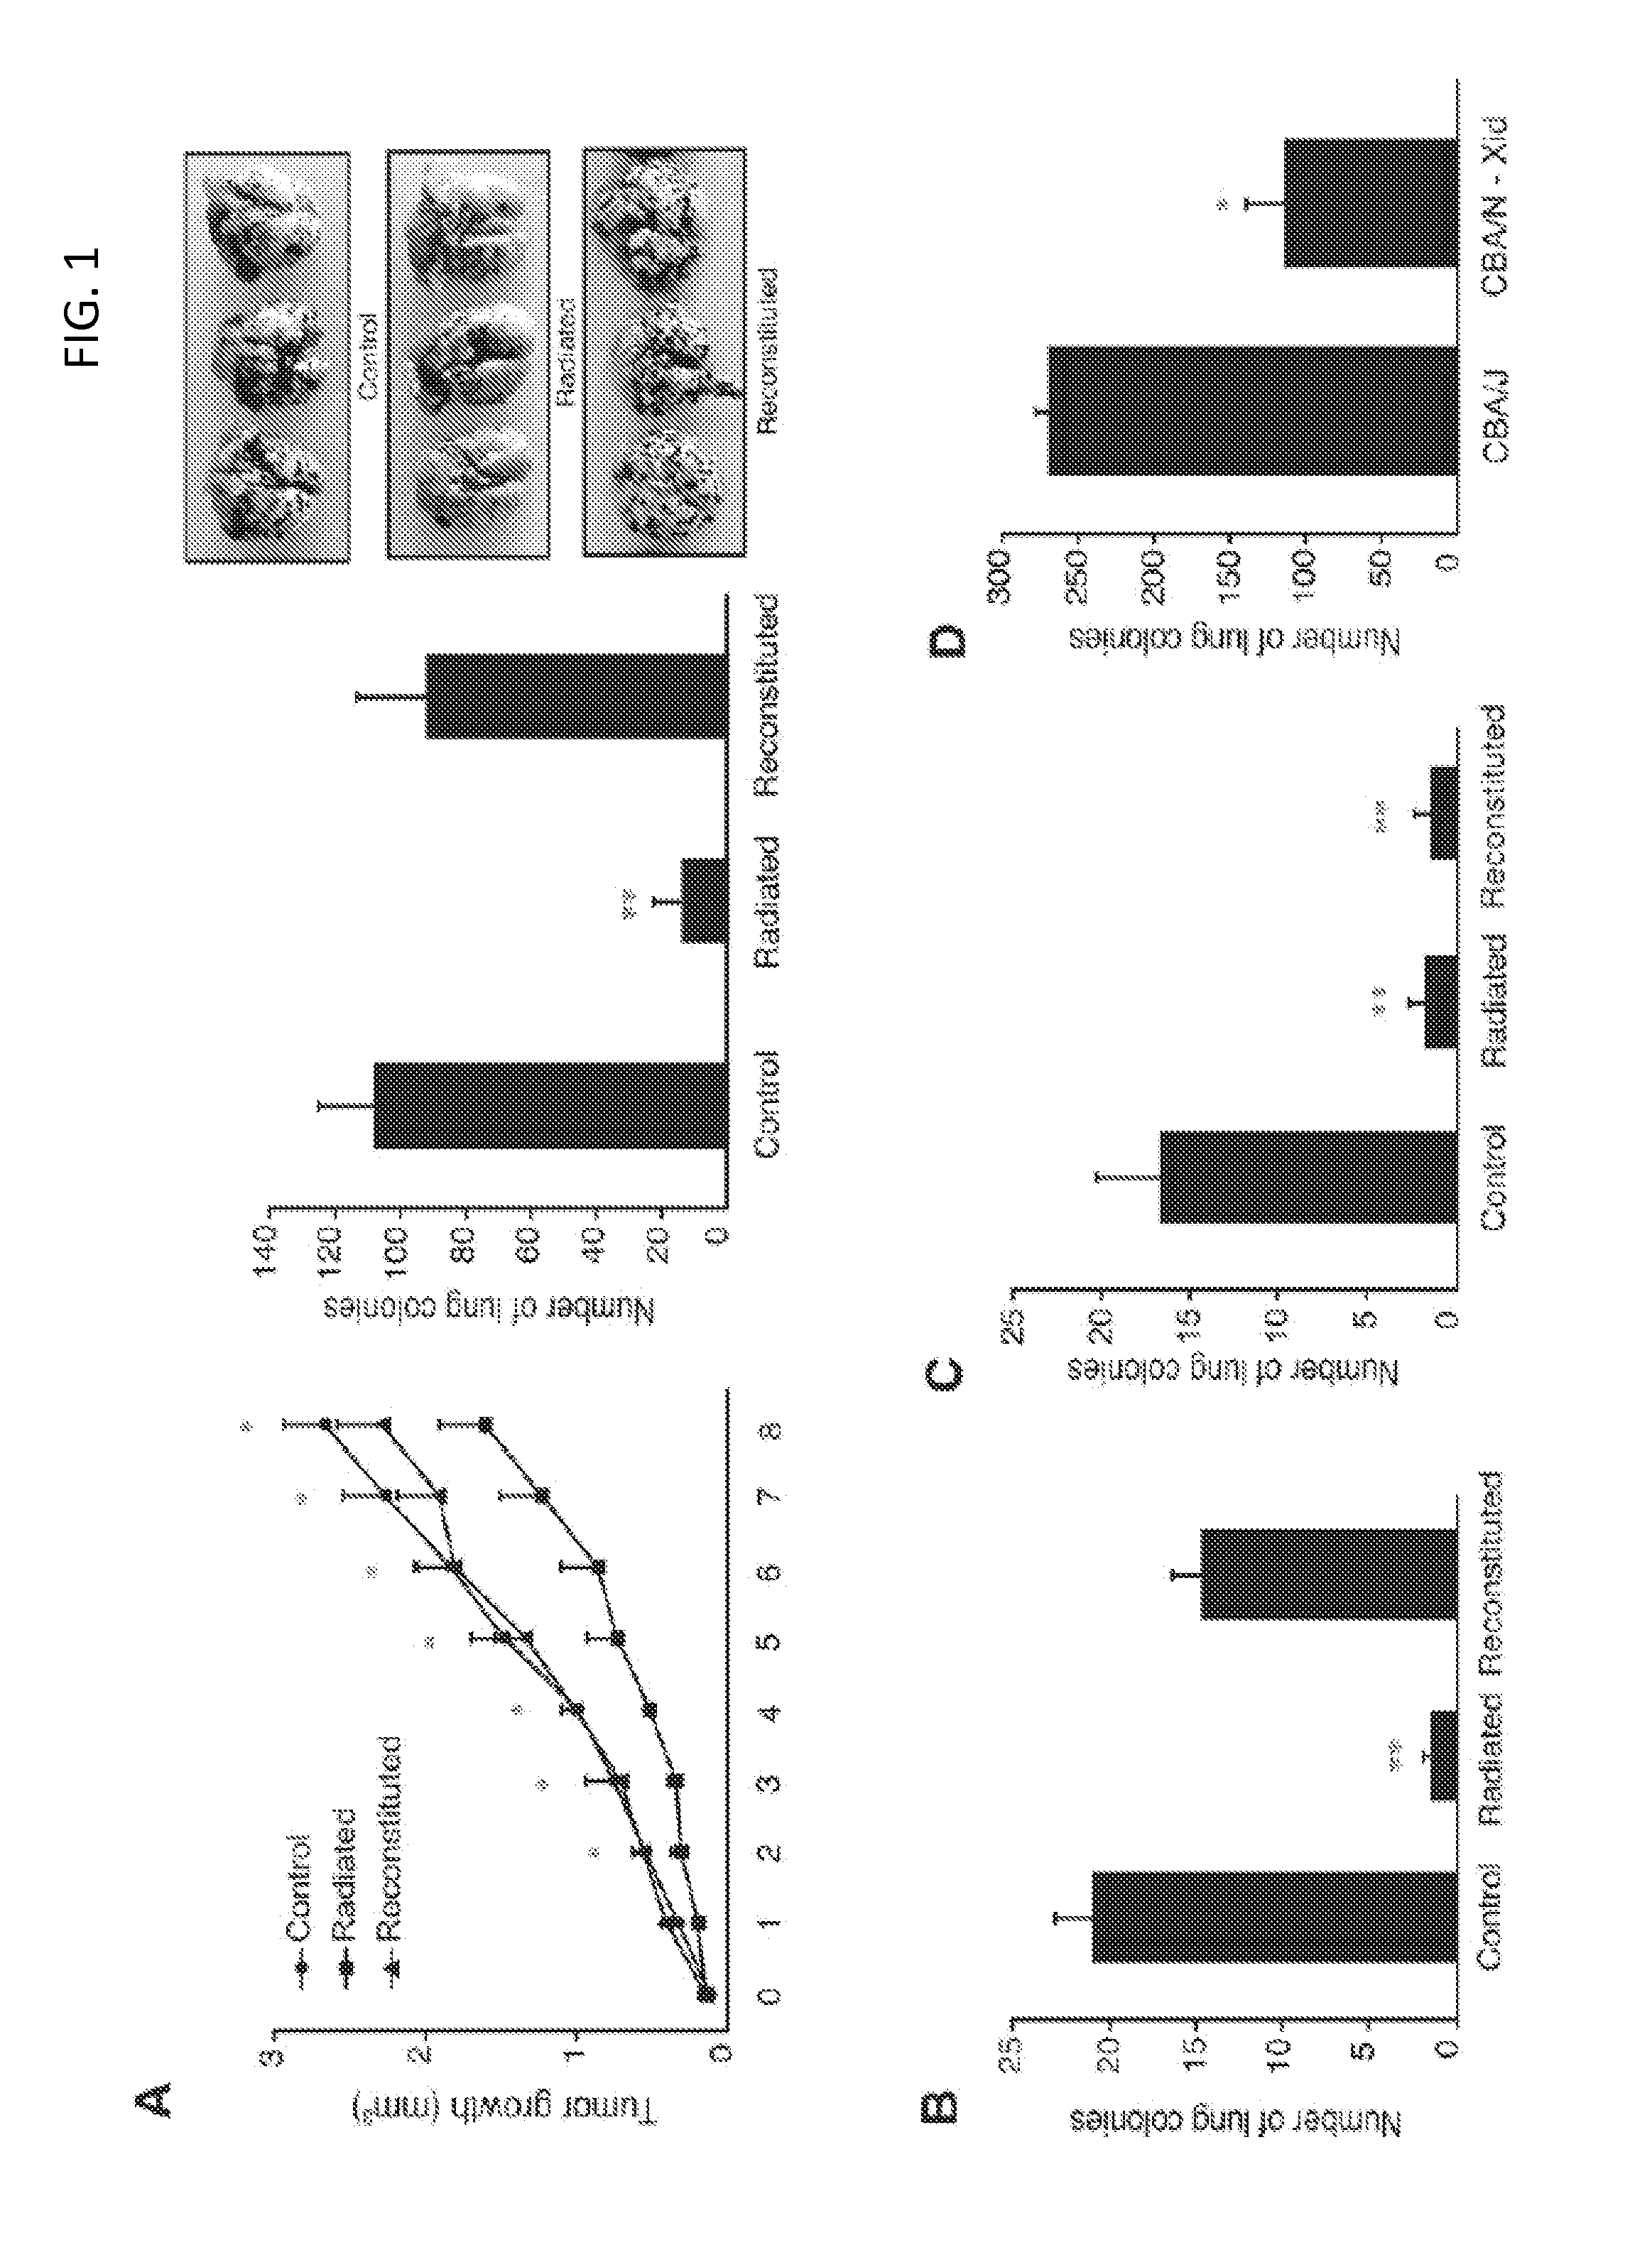 MUC18 targeting peptides